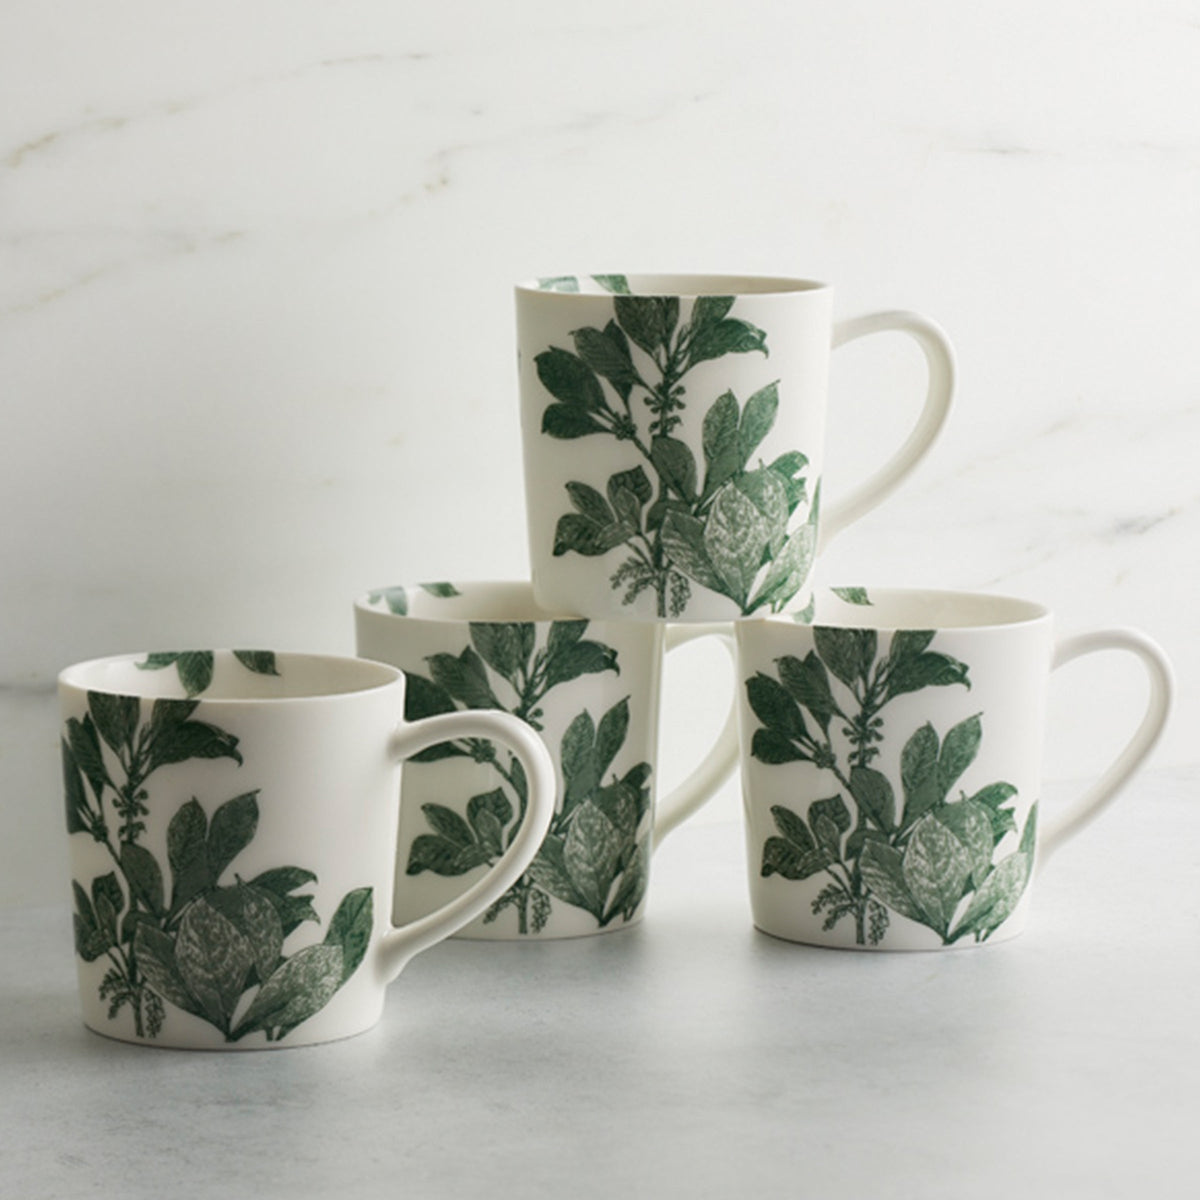 Set of 4 Arbor Green Mugs from Caskata.